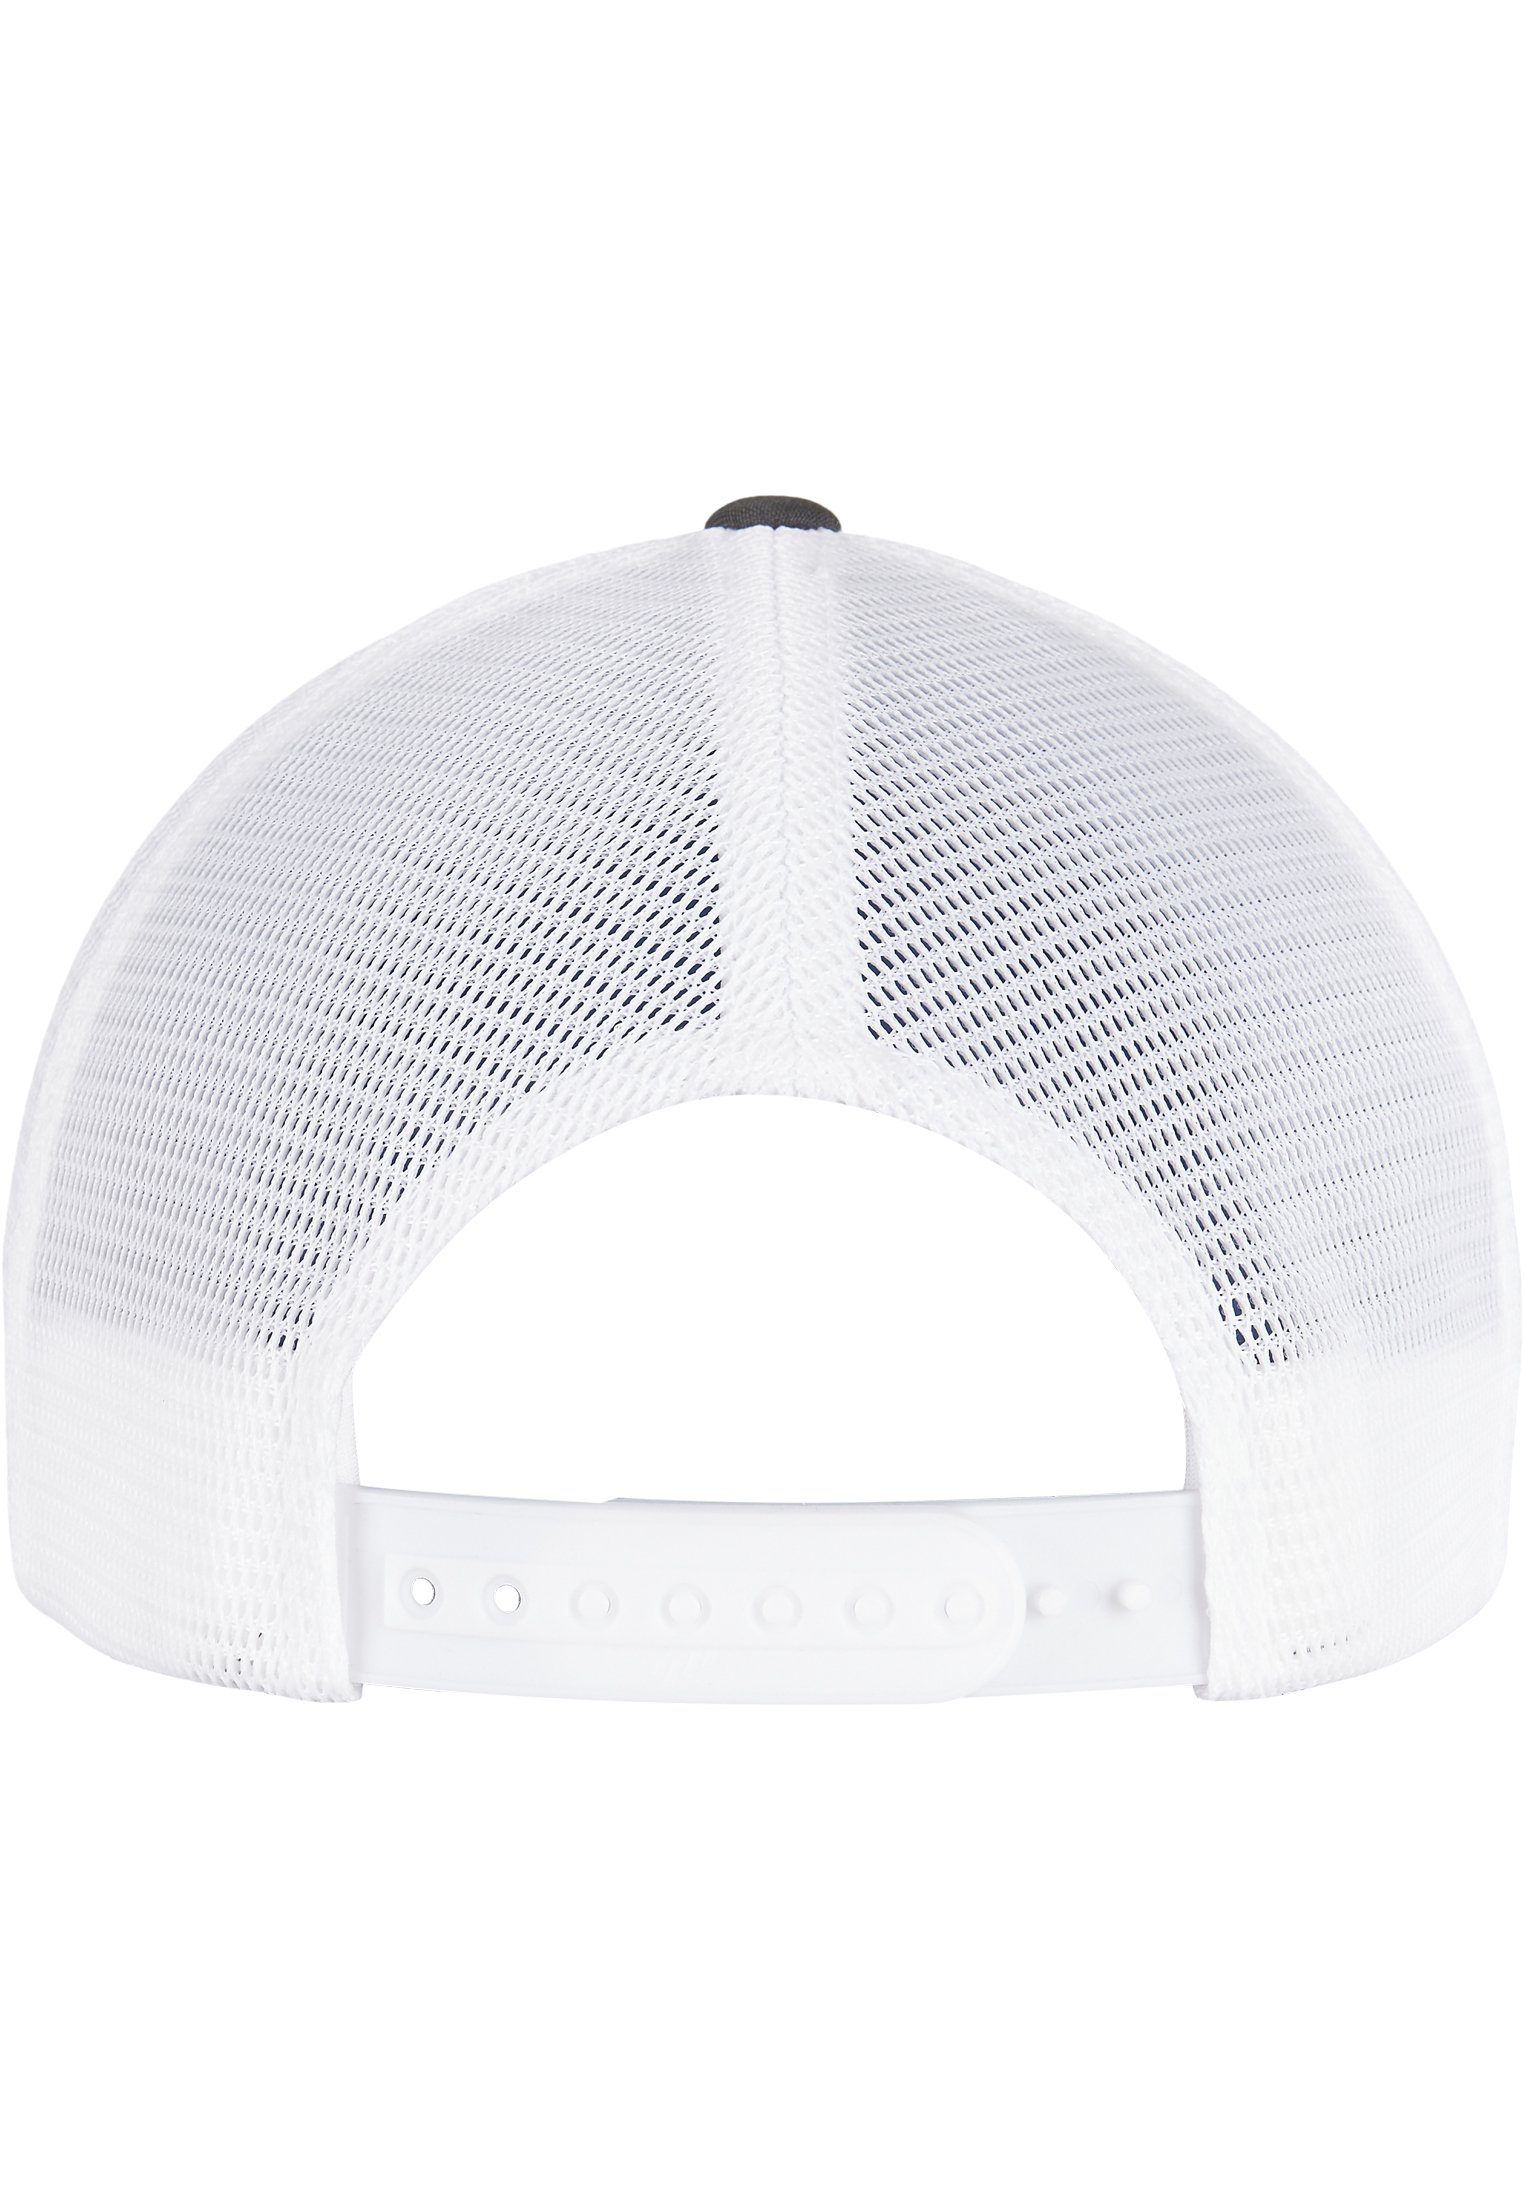 Flexfit Flex Cap Omnimesh charcoal/white Accessoires 360° Cap 2-Tone